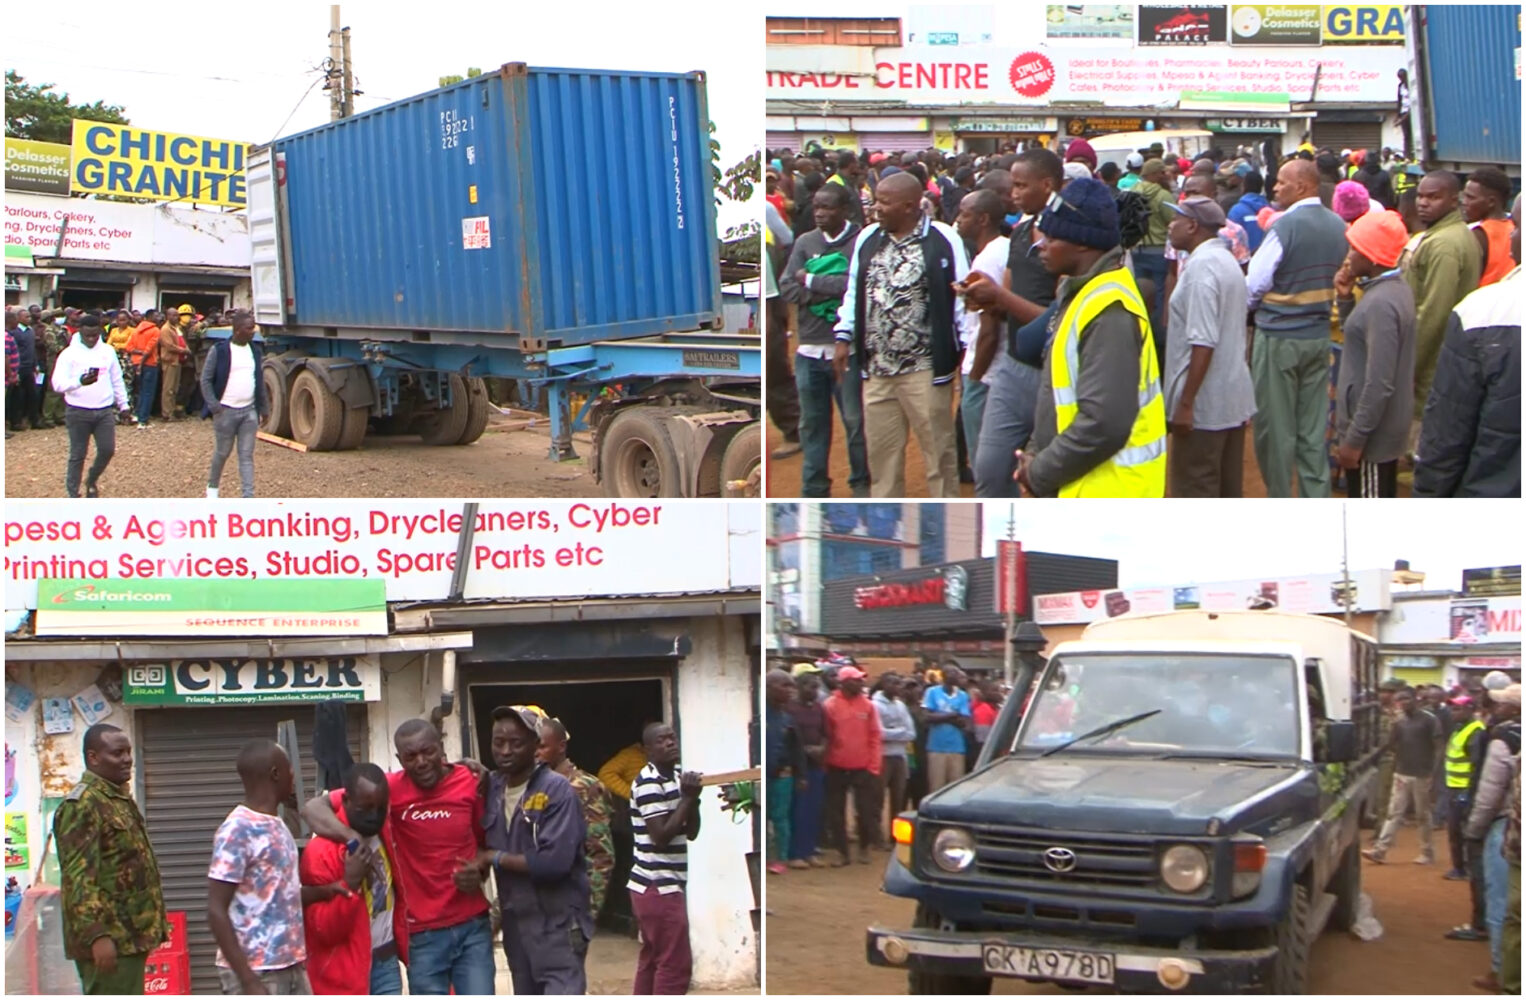 Three men die while offloading granite from a truck in Ruiru